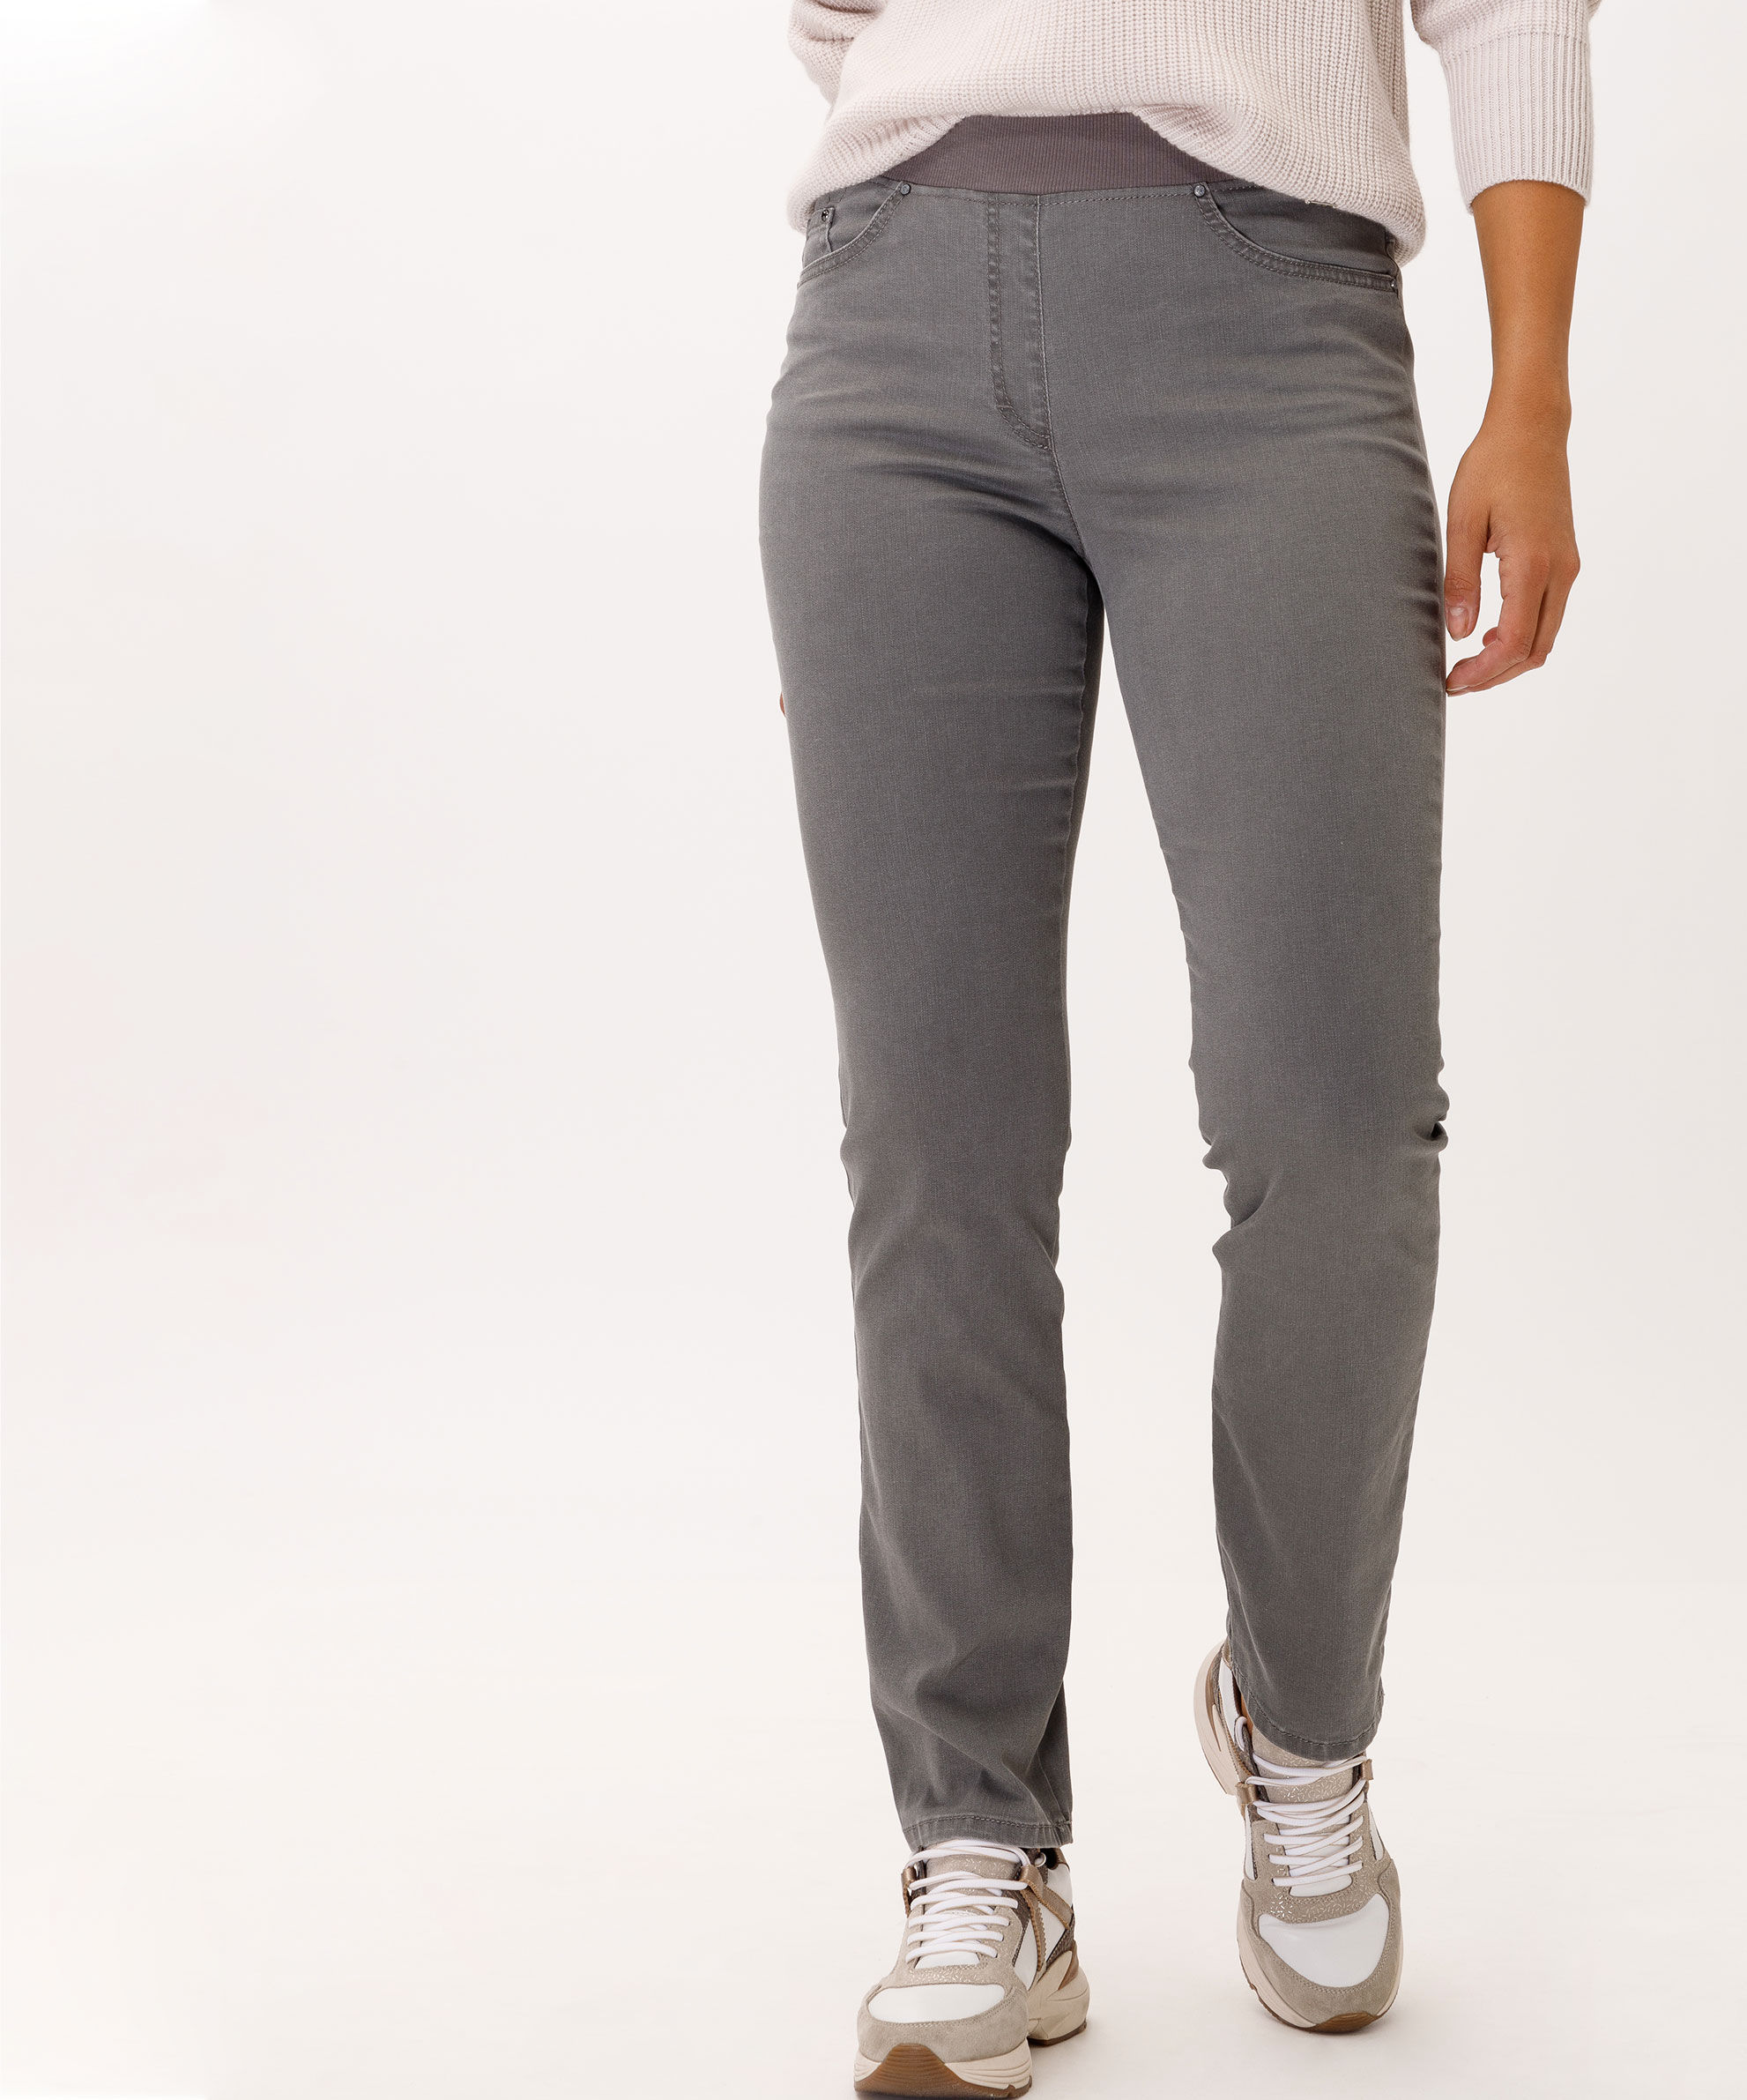 RAPHAELA BY STRETCH Jeans Pamina Brax | BRAX Jeans-Manufaktur | 10949420 | grey PAMINA | Jeans Damen 10-6220-06 | Raphaela